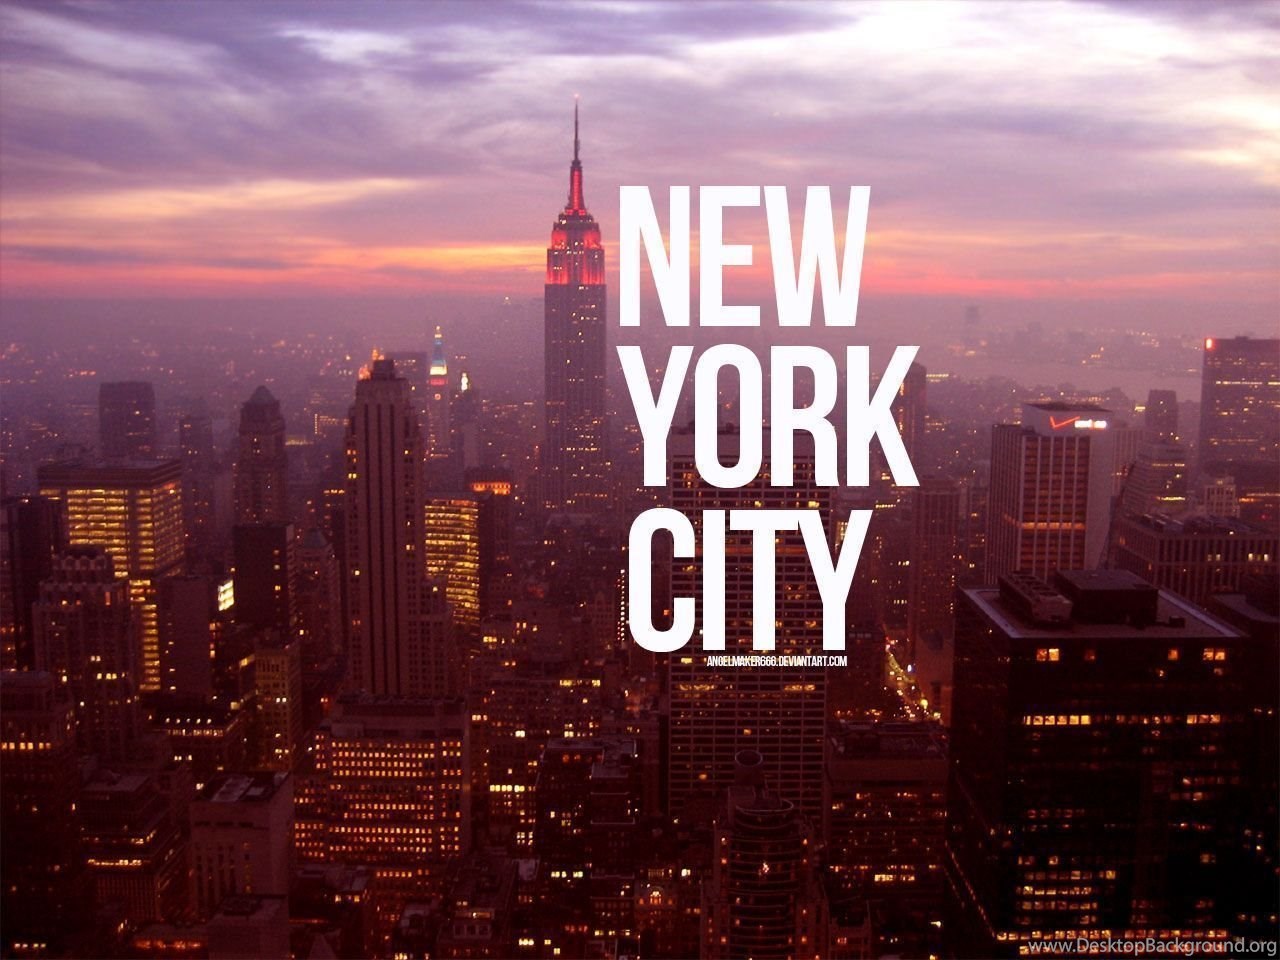 My city new york